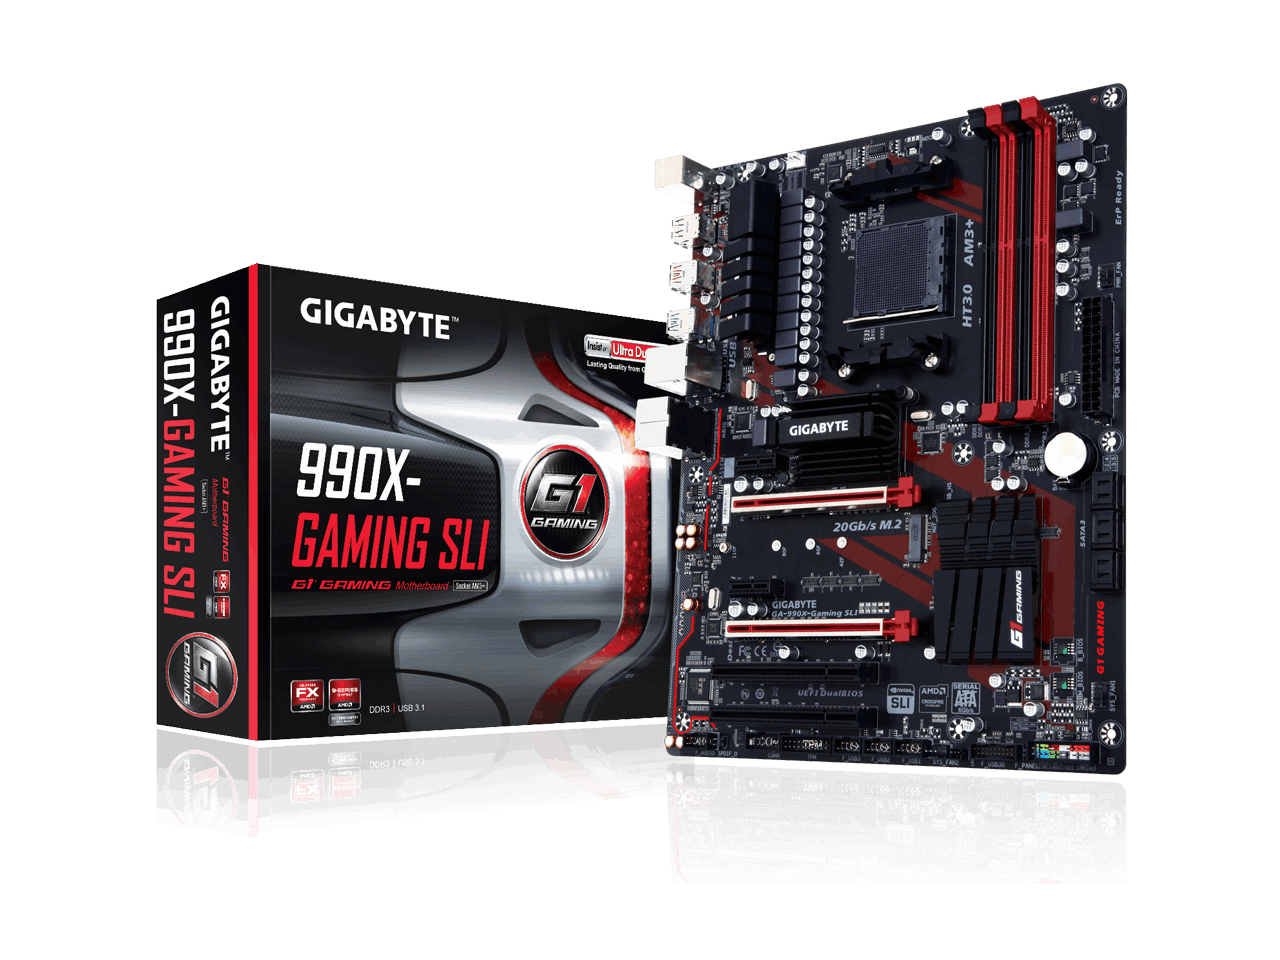 Gigabyte gaming 1. Gigabyte 990fx. Fx990 am3+. Gigabyte ga AMD. Материнская плата Gigabyte ga-990fx-Gaming.